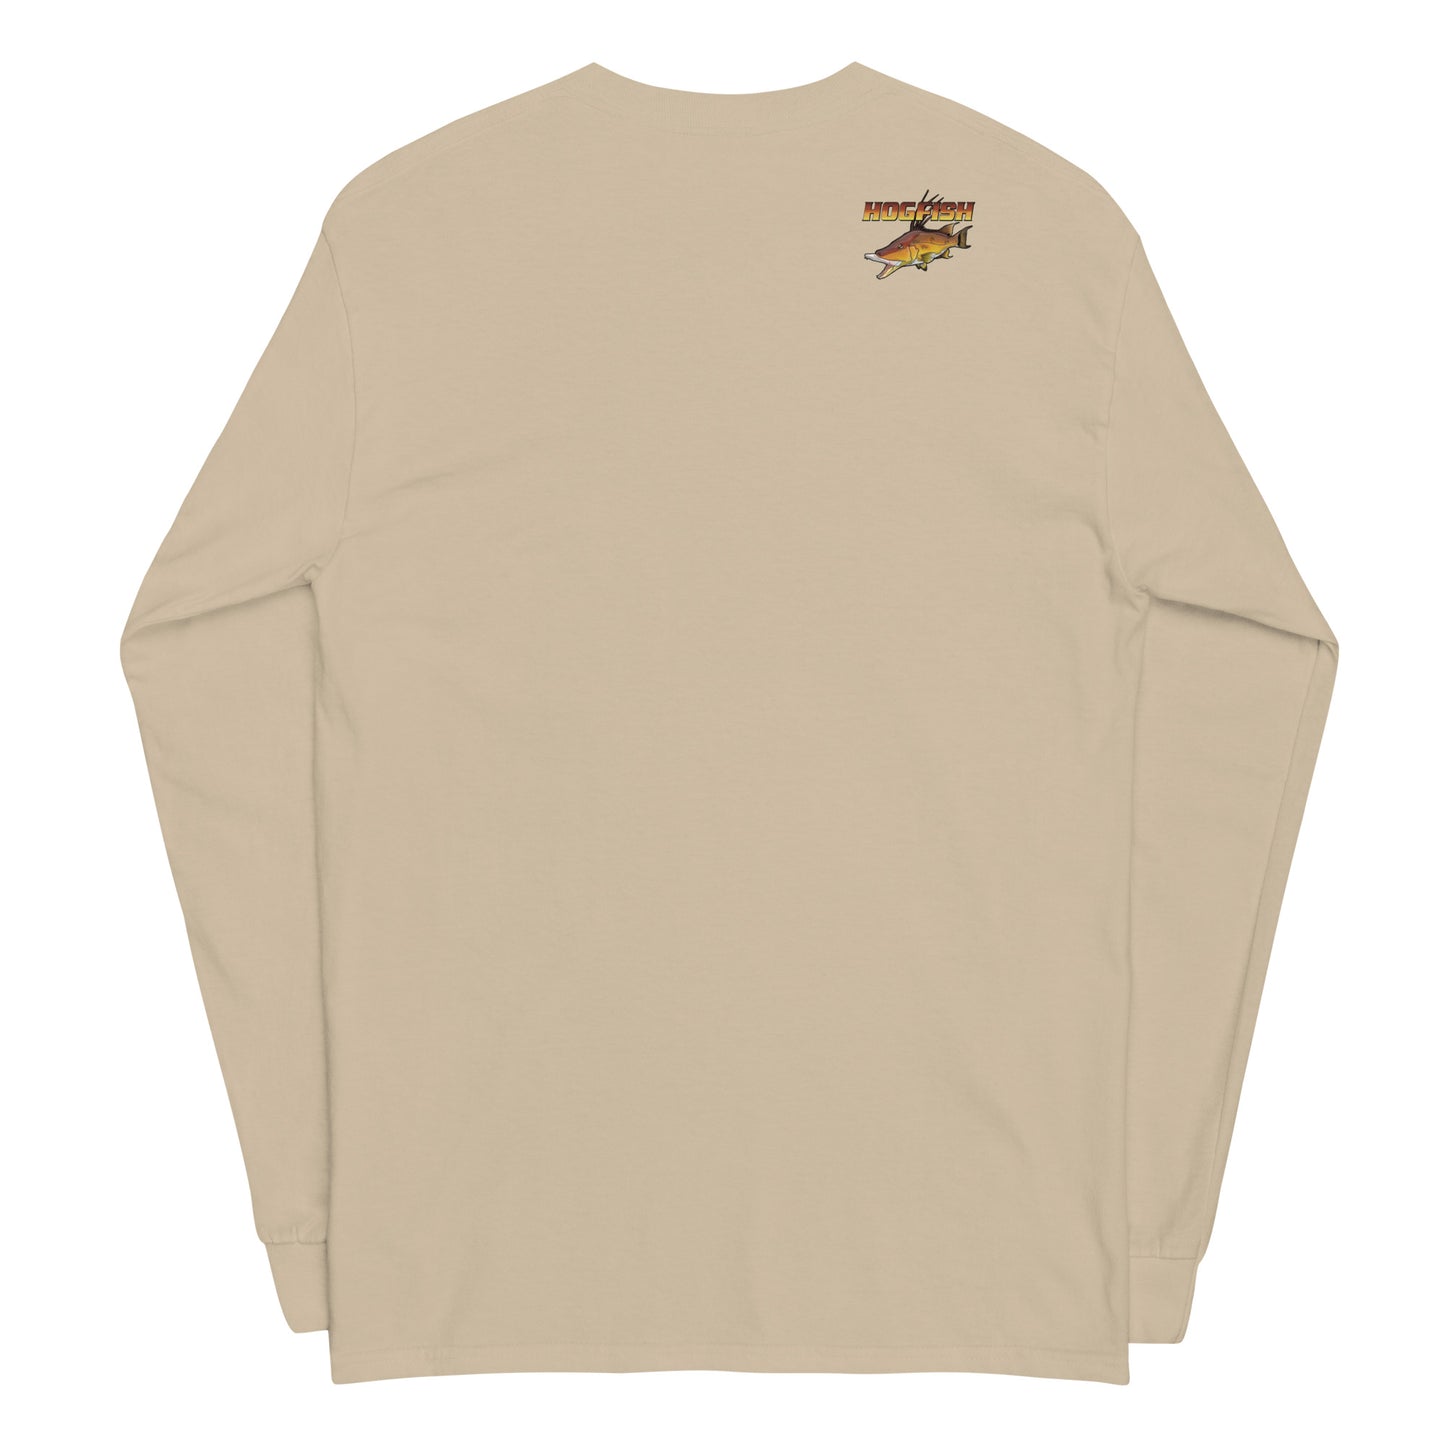 Hogfish Long Sleeve Shirt